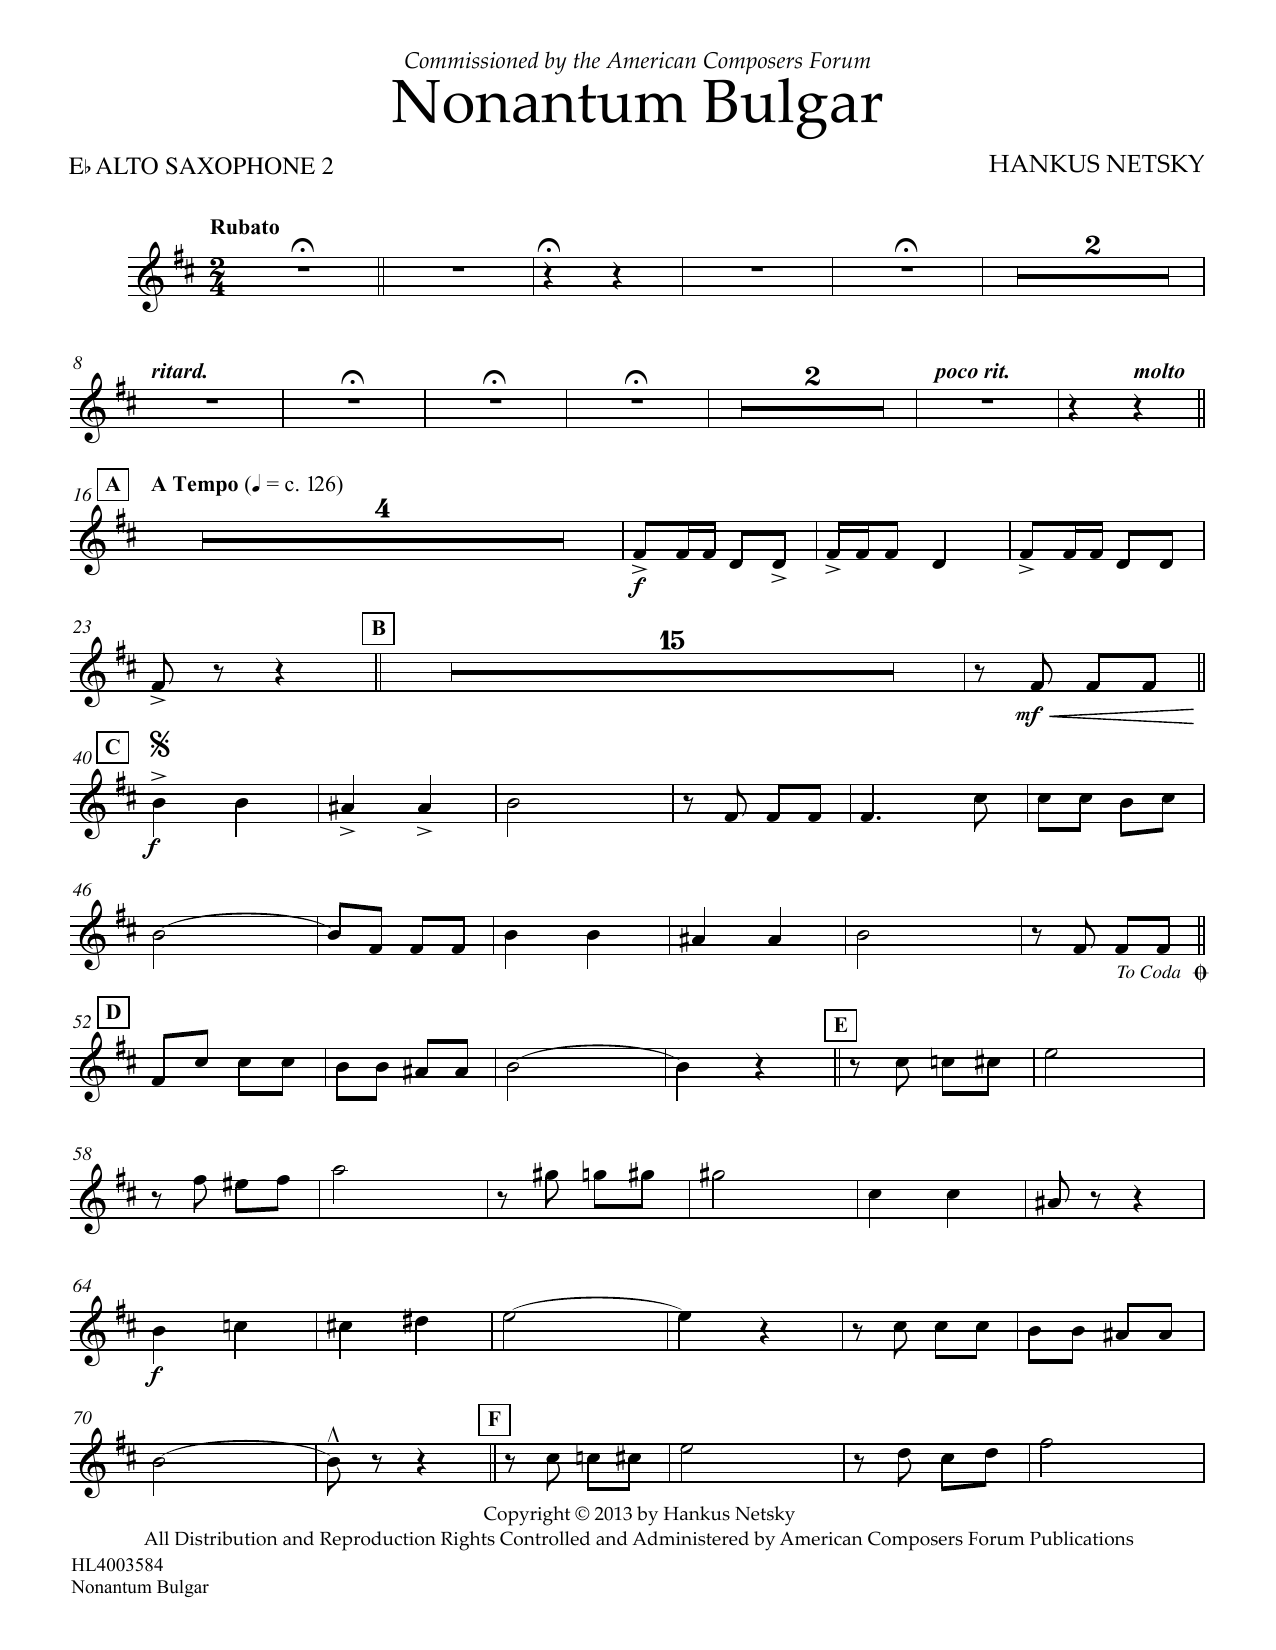 Download Hankus Netsky Nonantum Bulgar - Eb Alto Saxophone 2 Sheet Music and learn how to play Concert Band PDF digital score in minutes